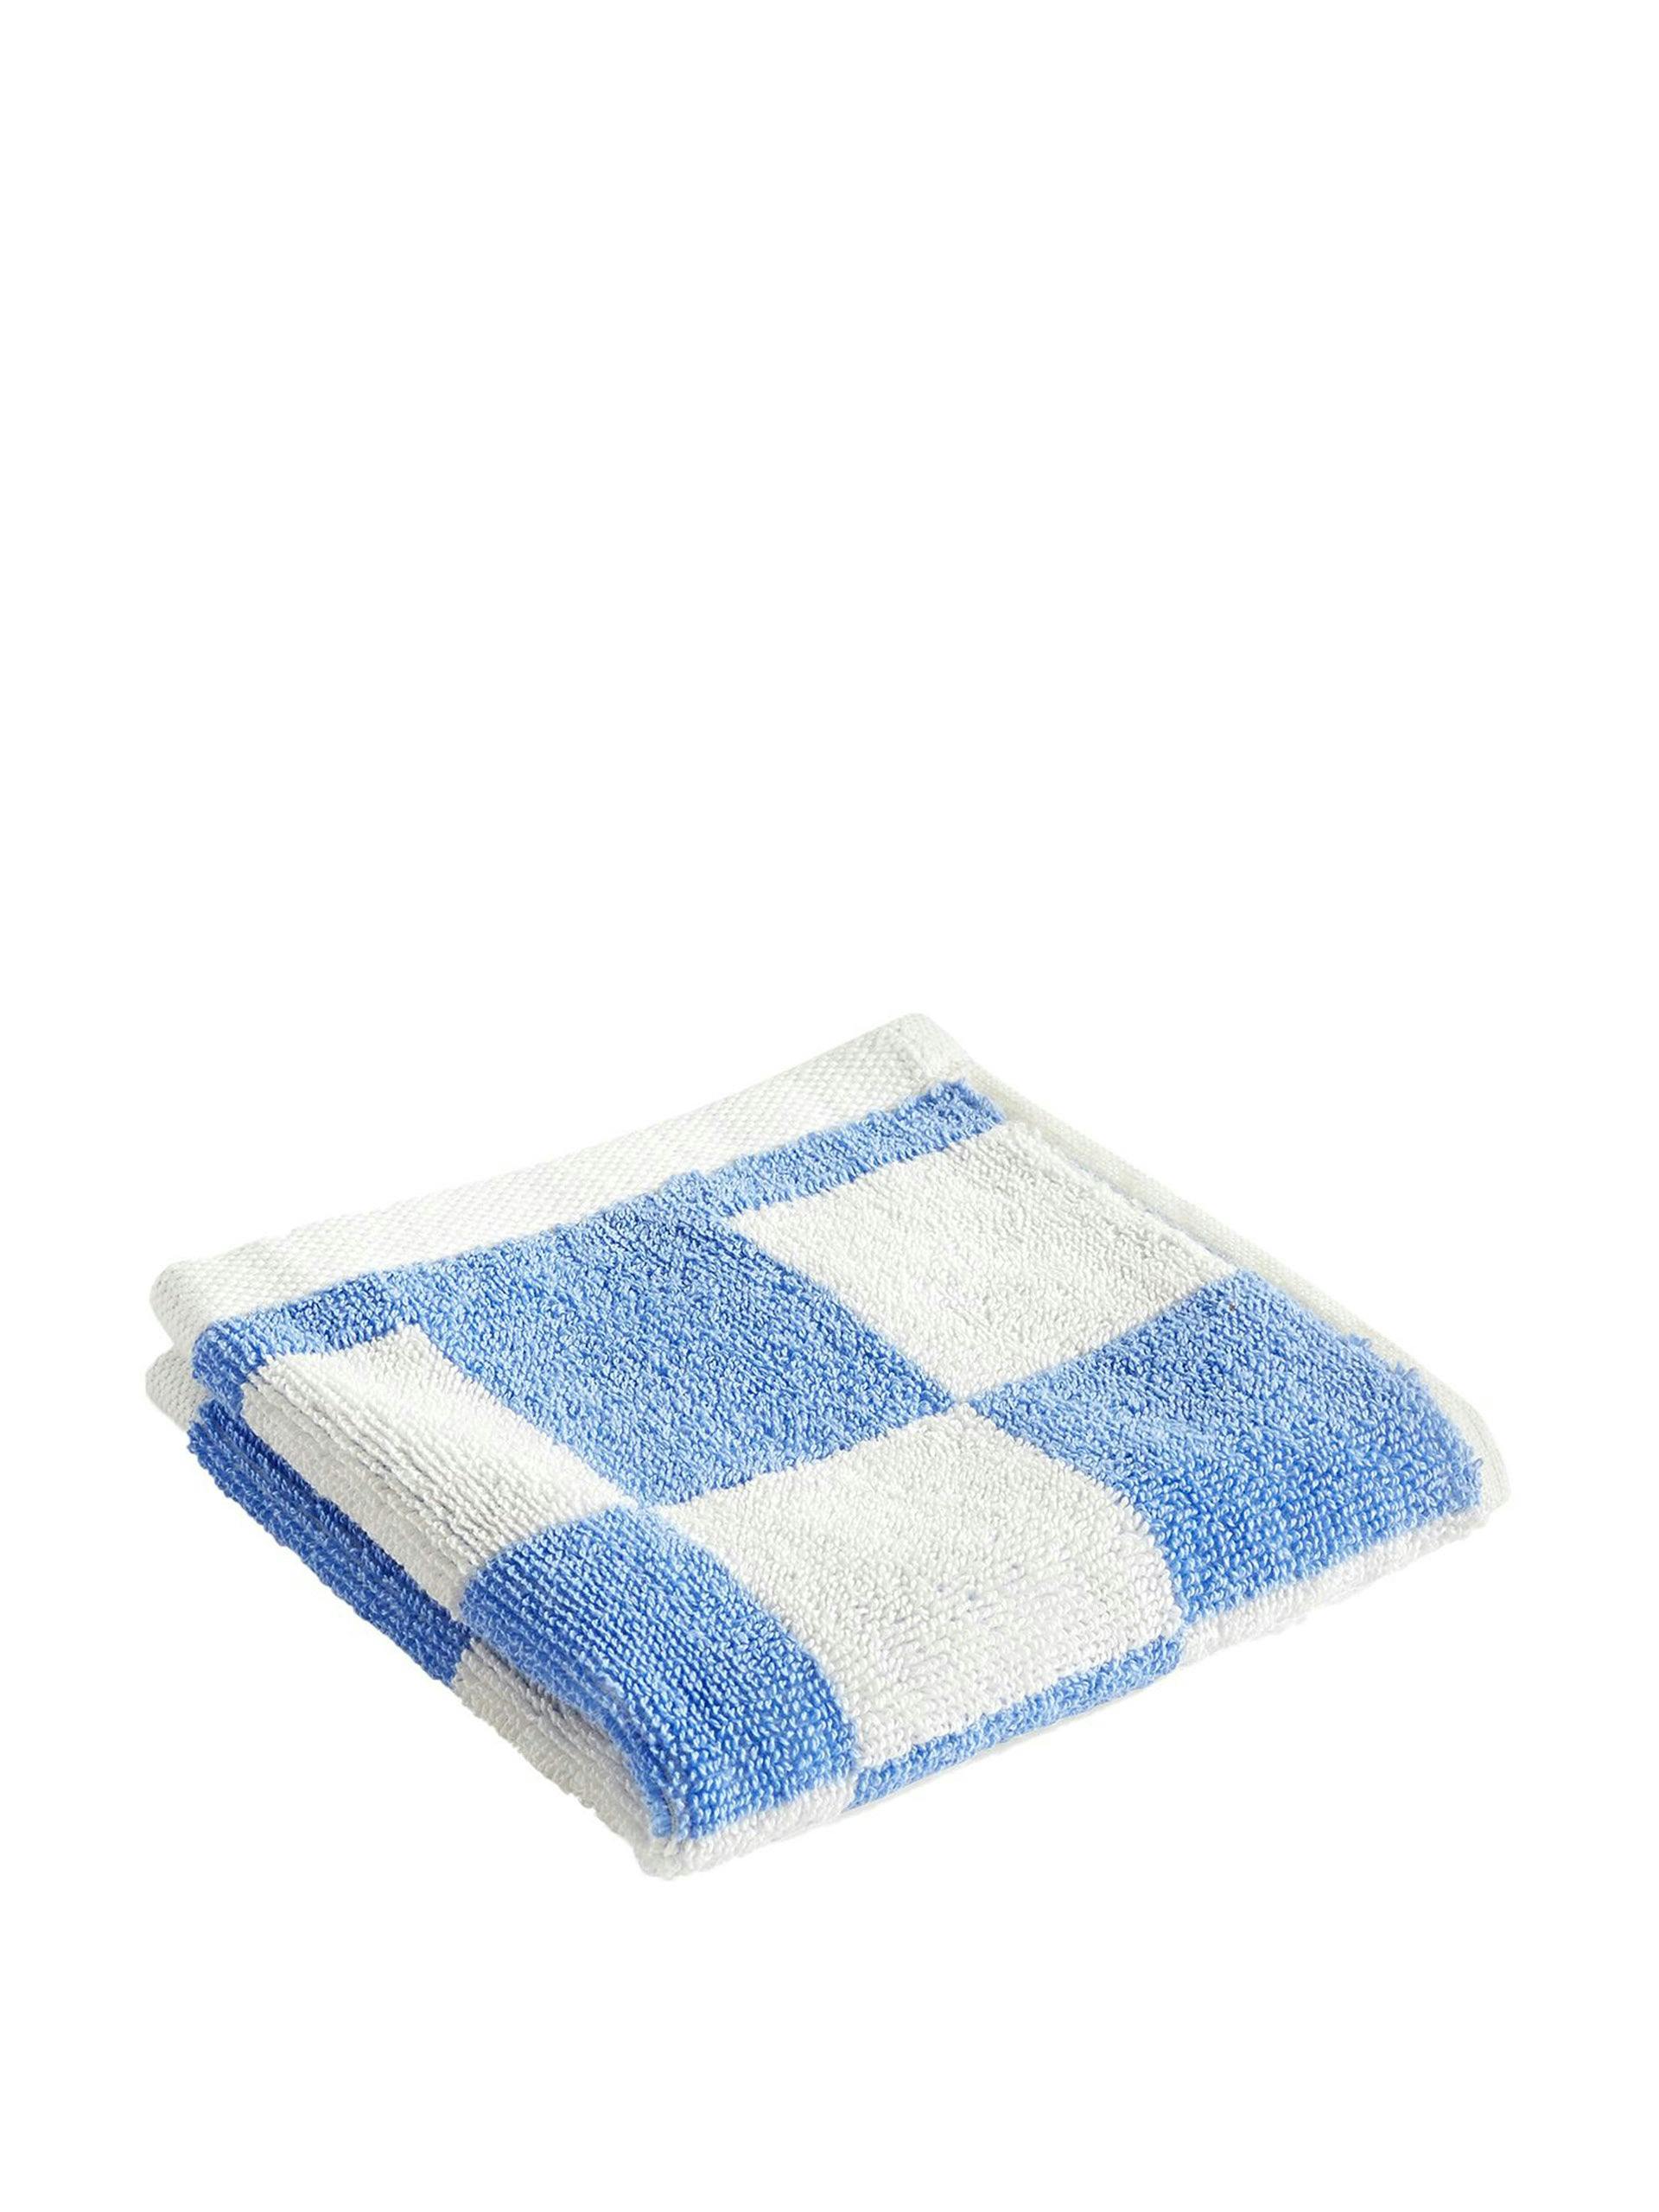 Blue checkered towel